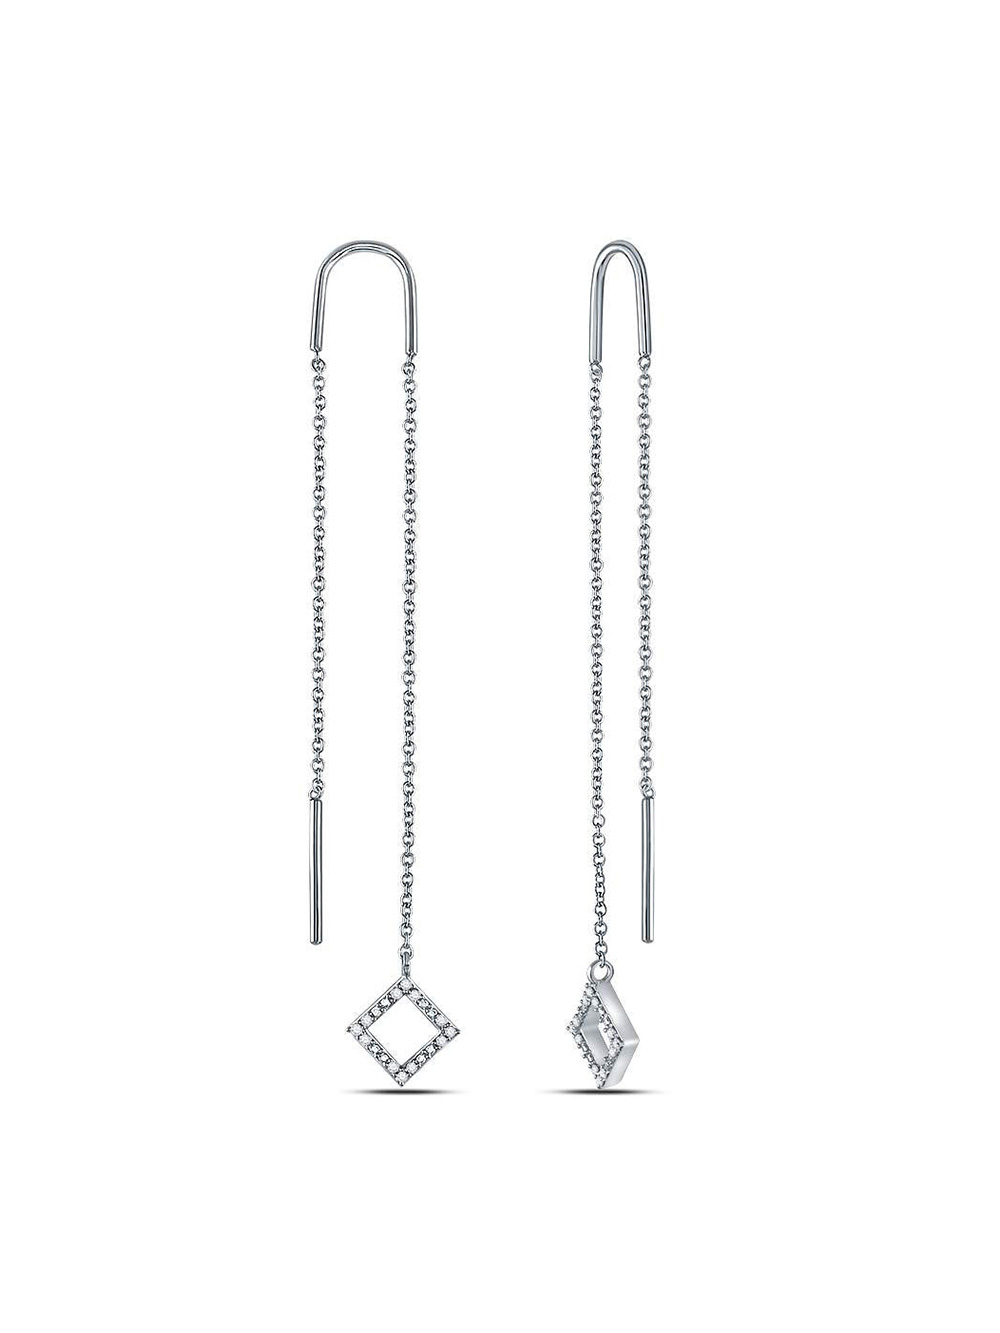 10kt White Gold Womens Round Diamond Threader Square Dangle Earrings 1/10 Cttw - image 1 of 1